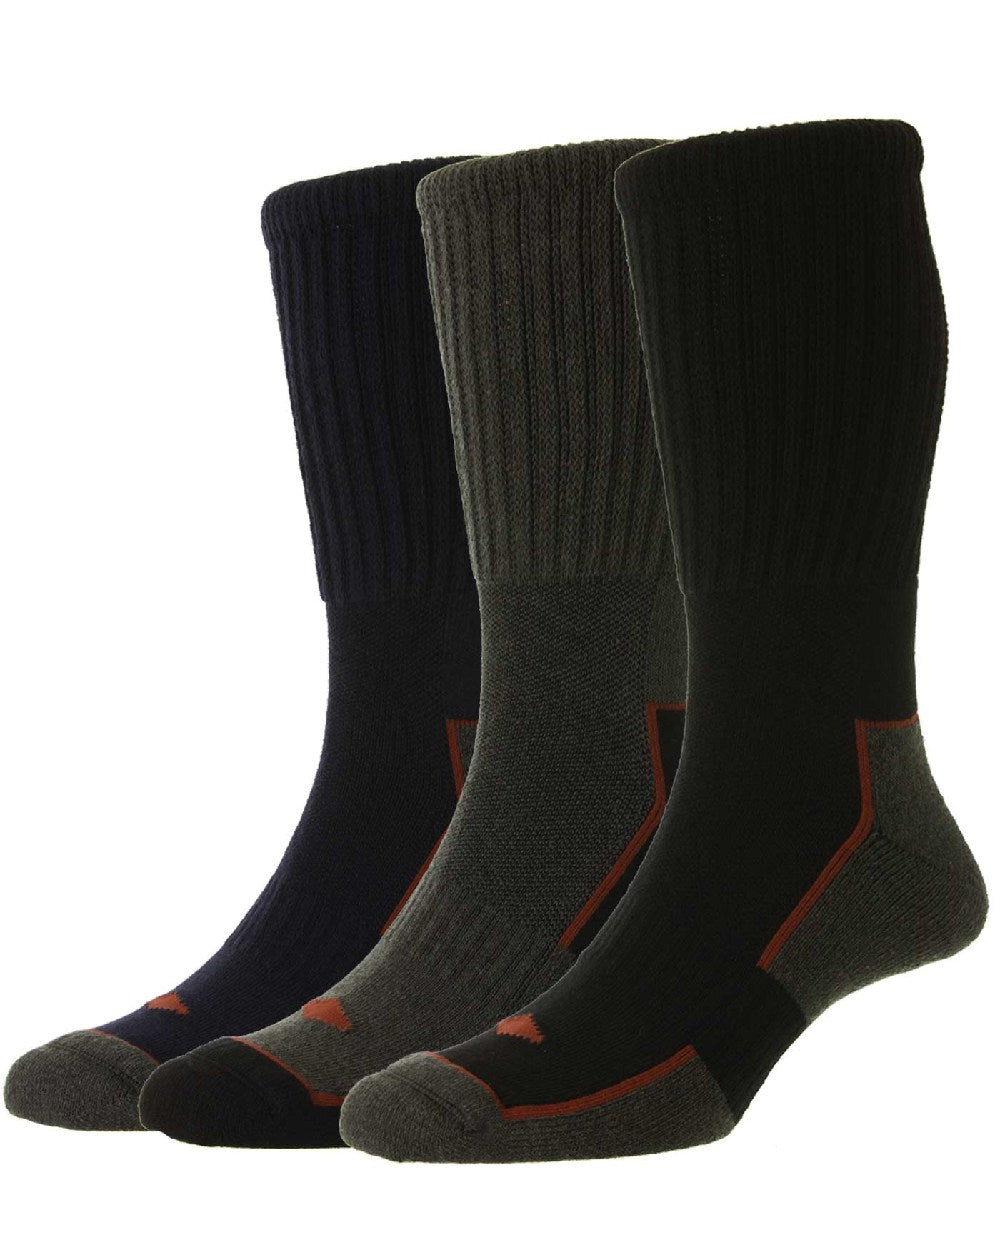 HJ Hall Long Cotton Comfort Top Work Sock | 3 Pack in Black Grey Navy 